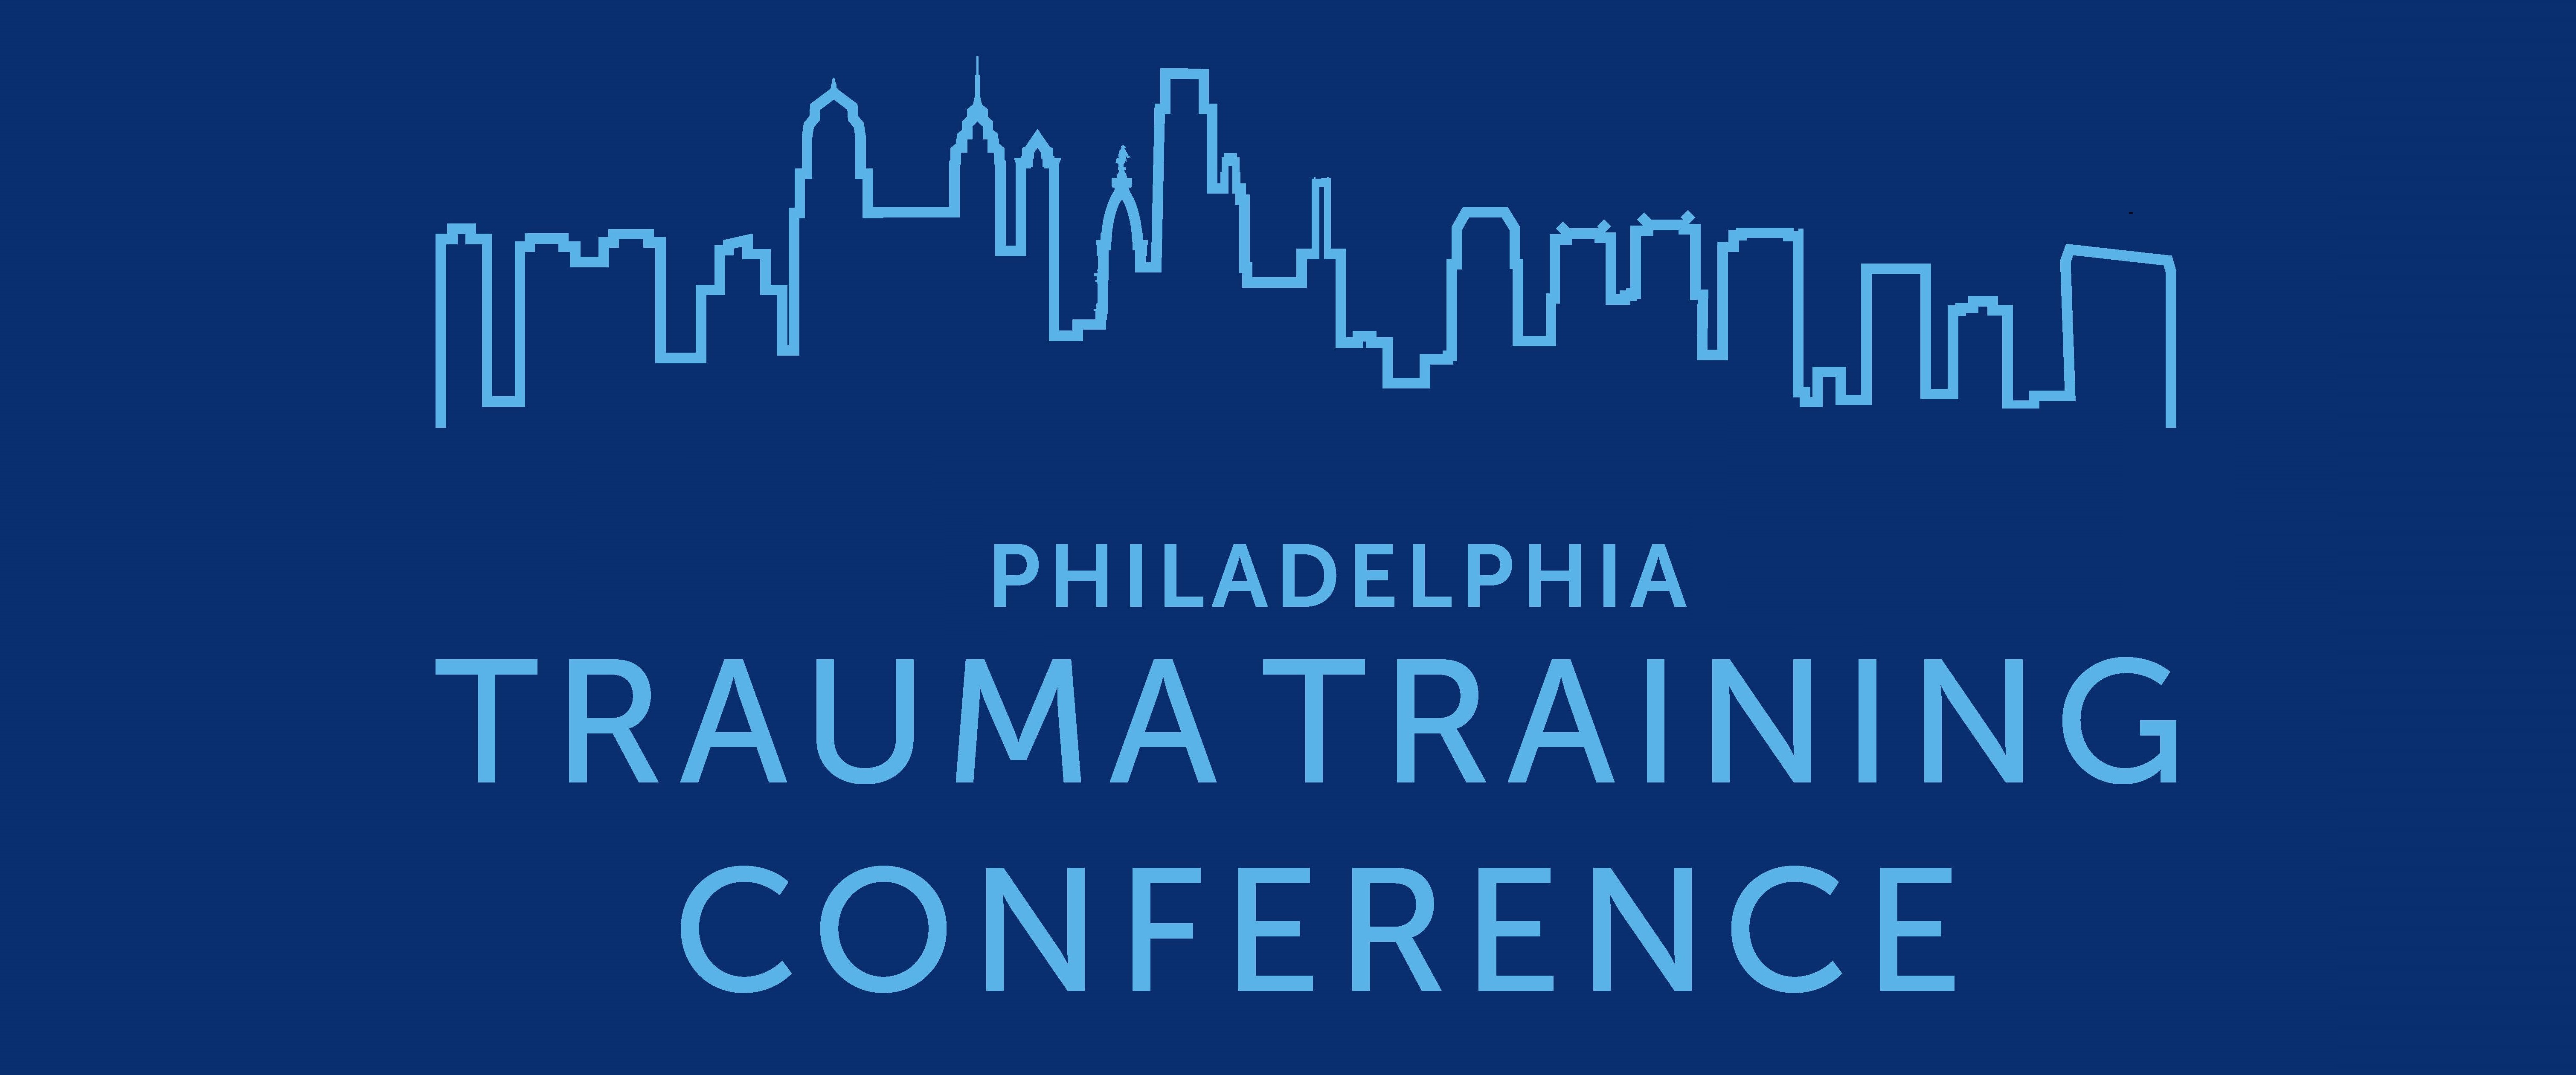 7th Annual Philadelphia Trauma Training Conference Banner